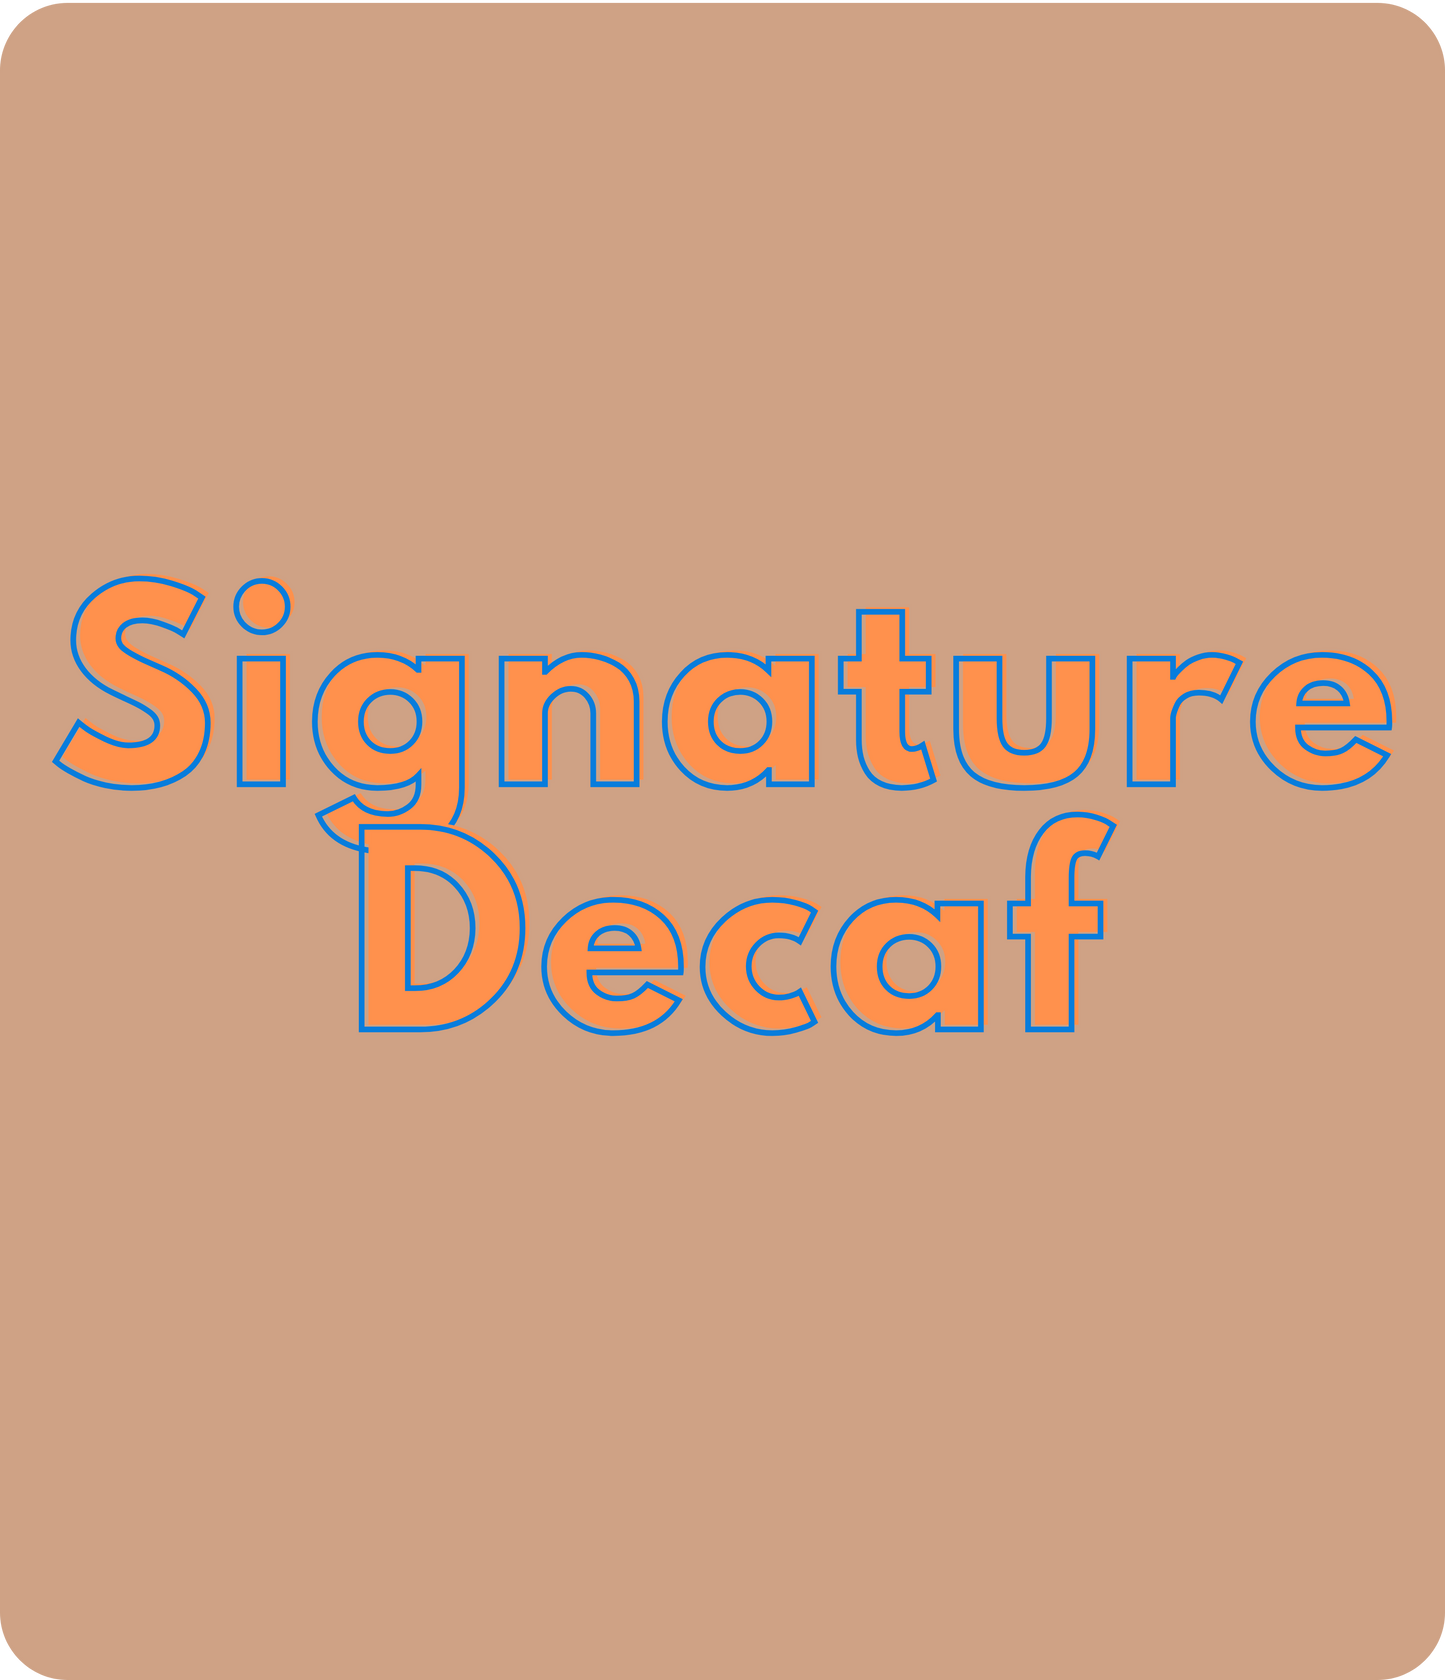 Decaf Signature Blend